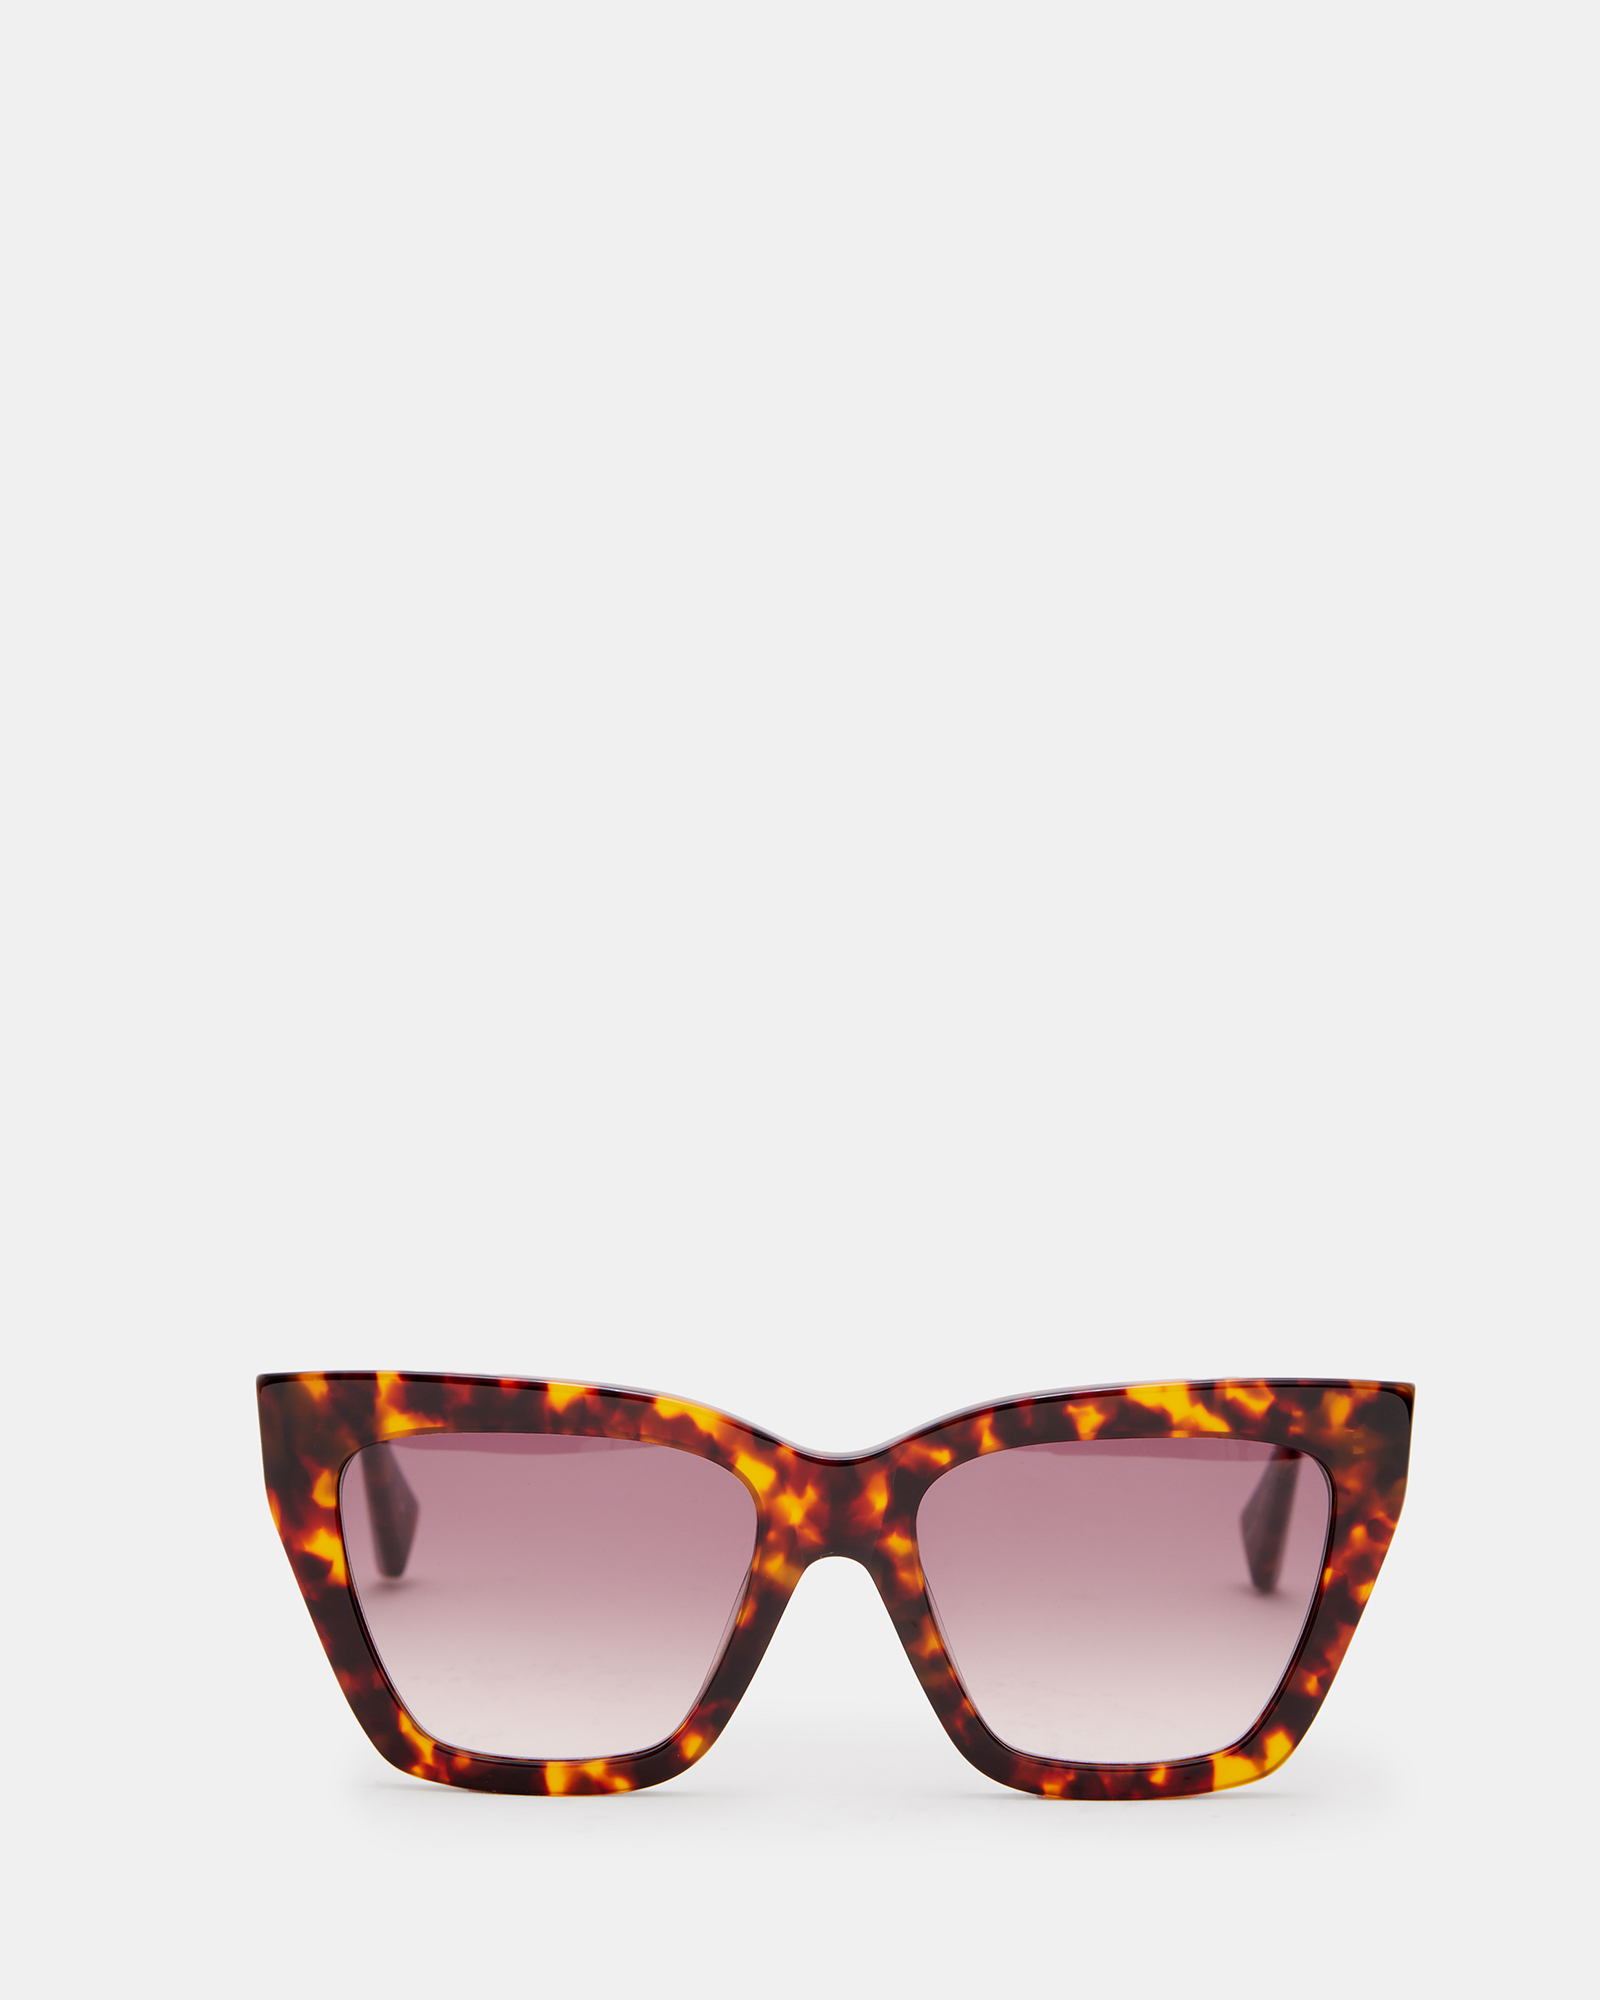 AllSaints Minerva Square Cat Eye Sunglasses,, Brown, Size: One Size